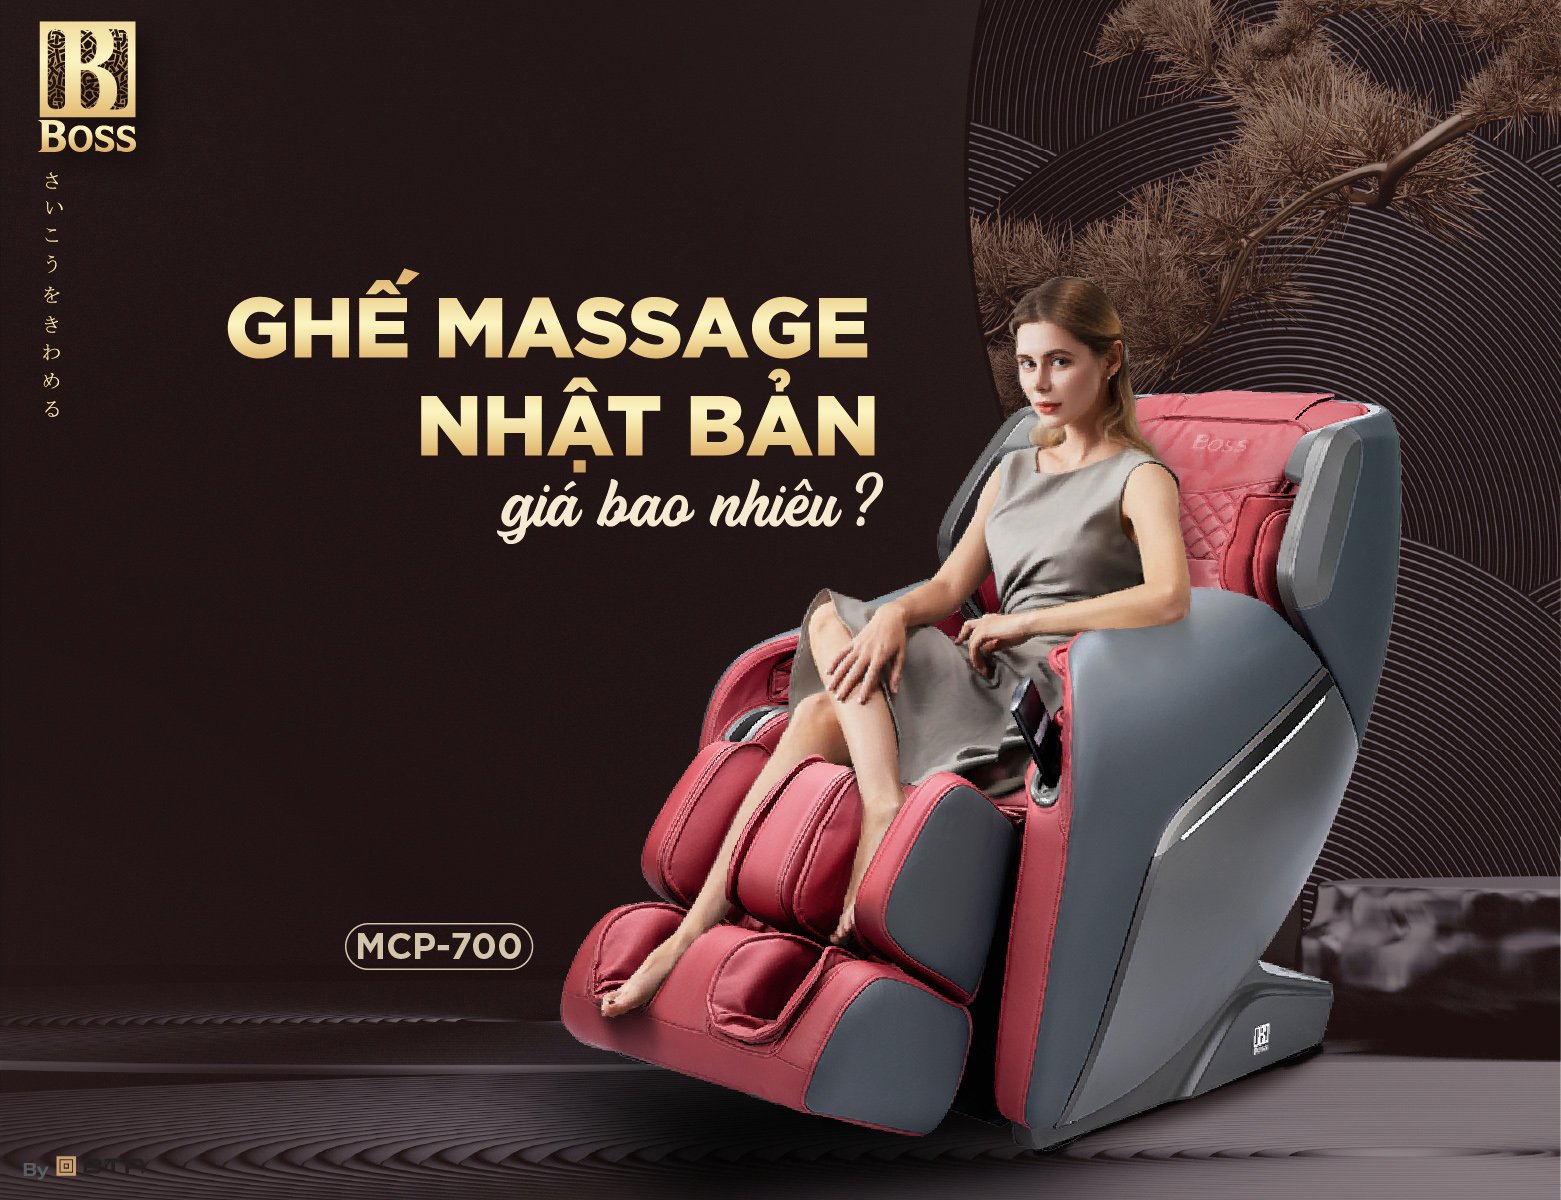 Ghế massage Nhật Bản giá bao nhiêu